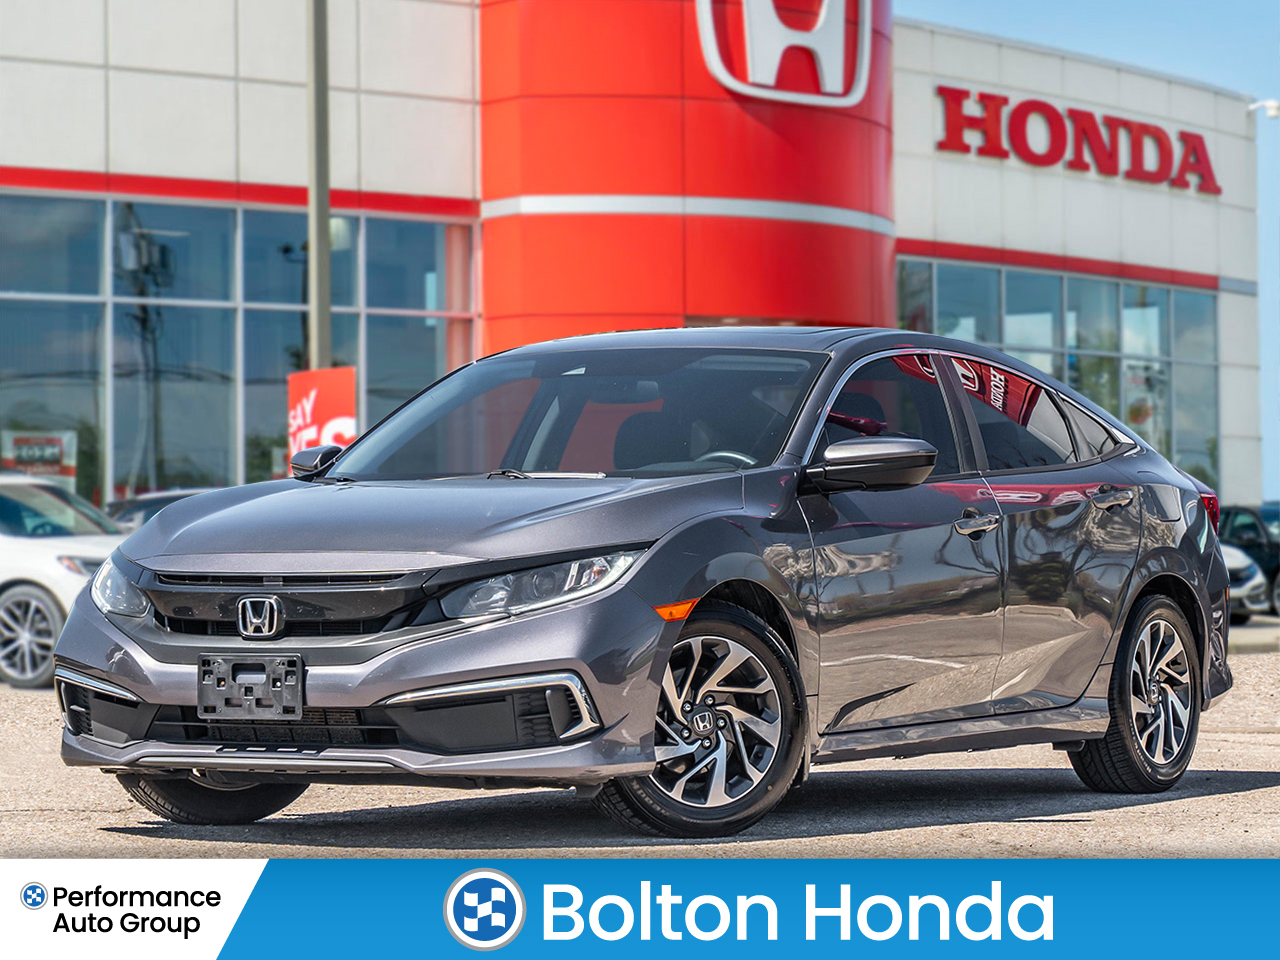 2020 Honda Civic Sedan SOLD SOLD SOLD SOLD | EX | HONDA CERTIFIED SERIES!